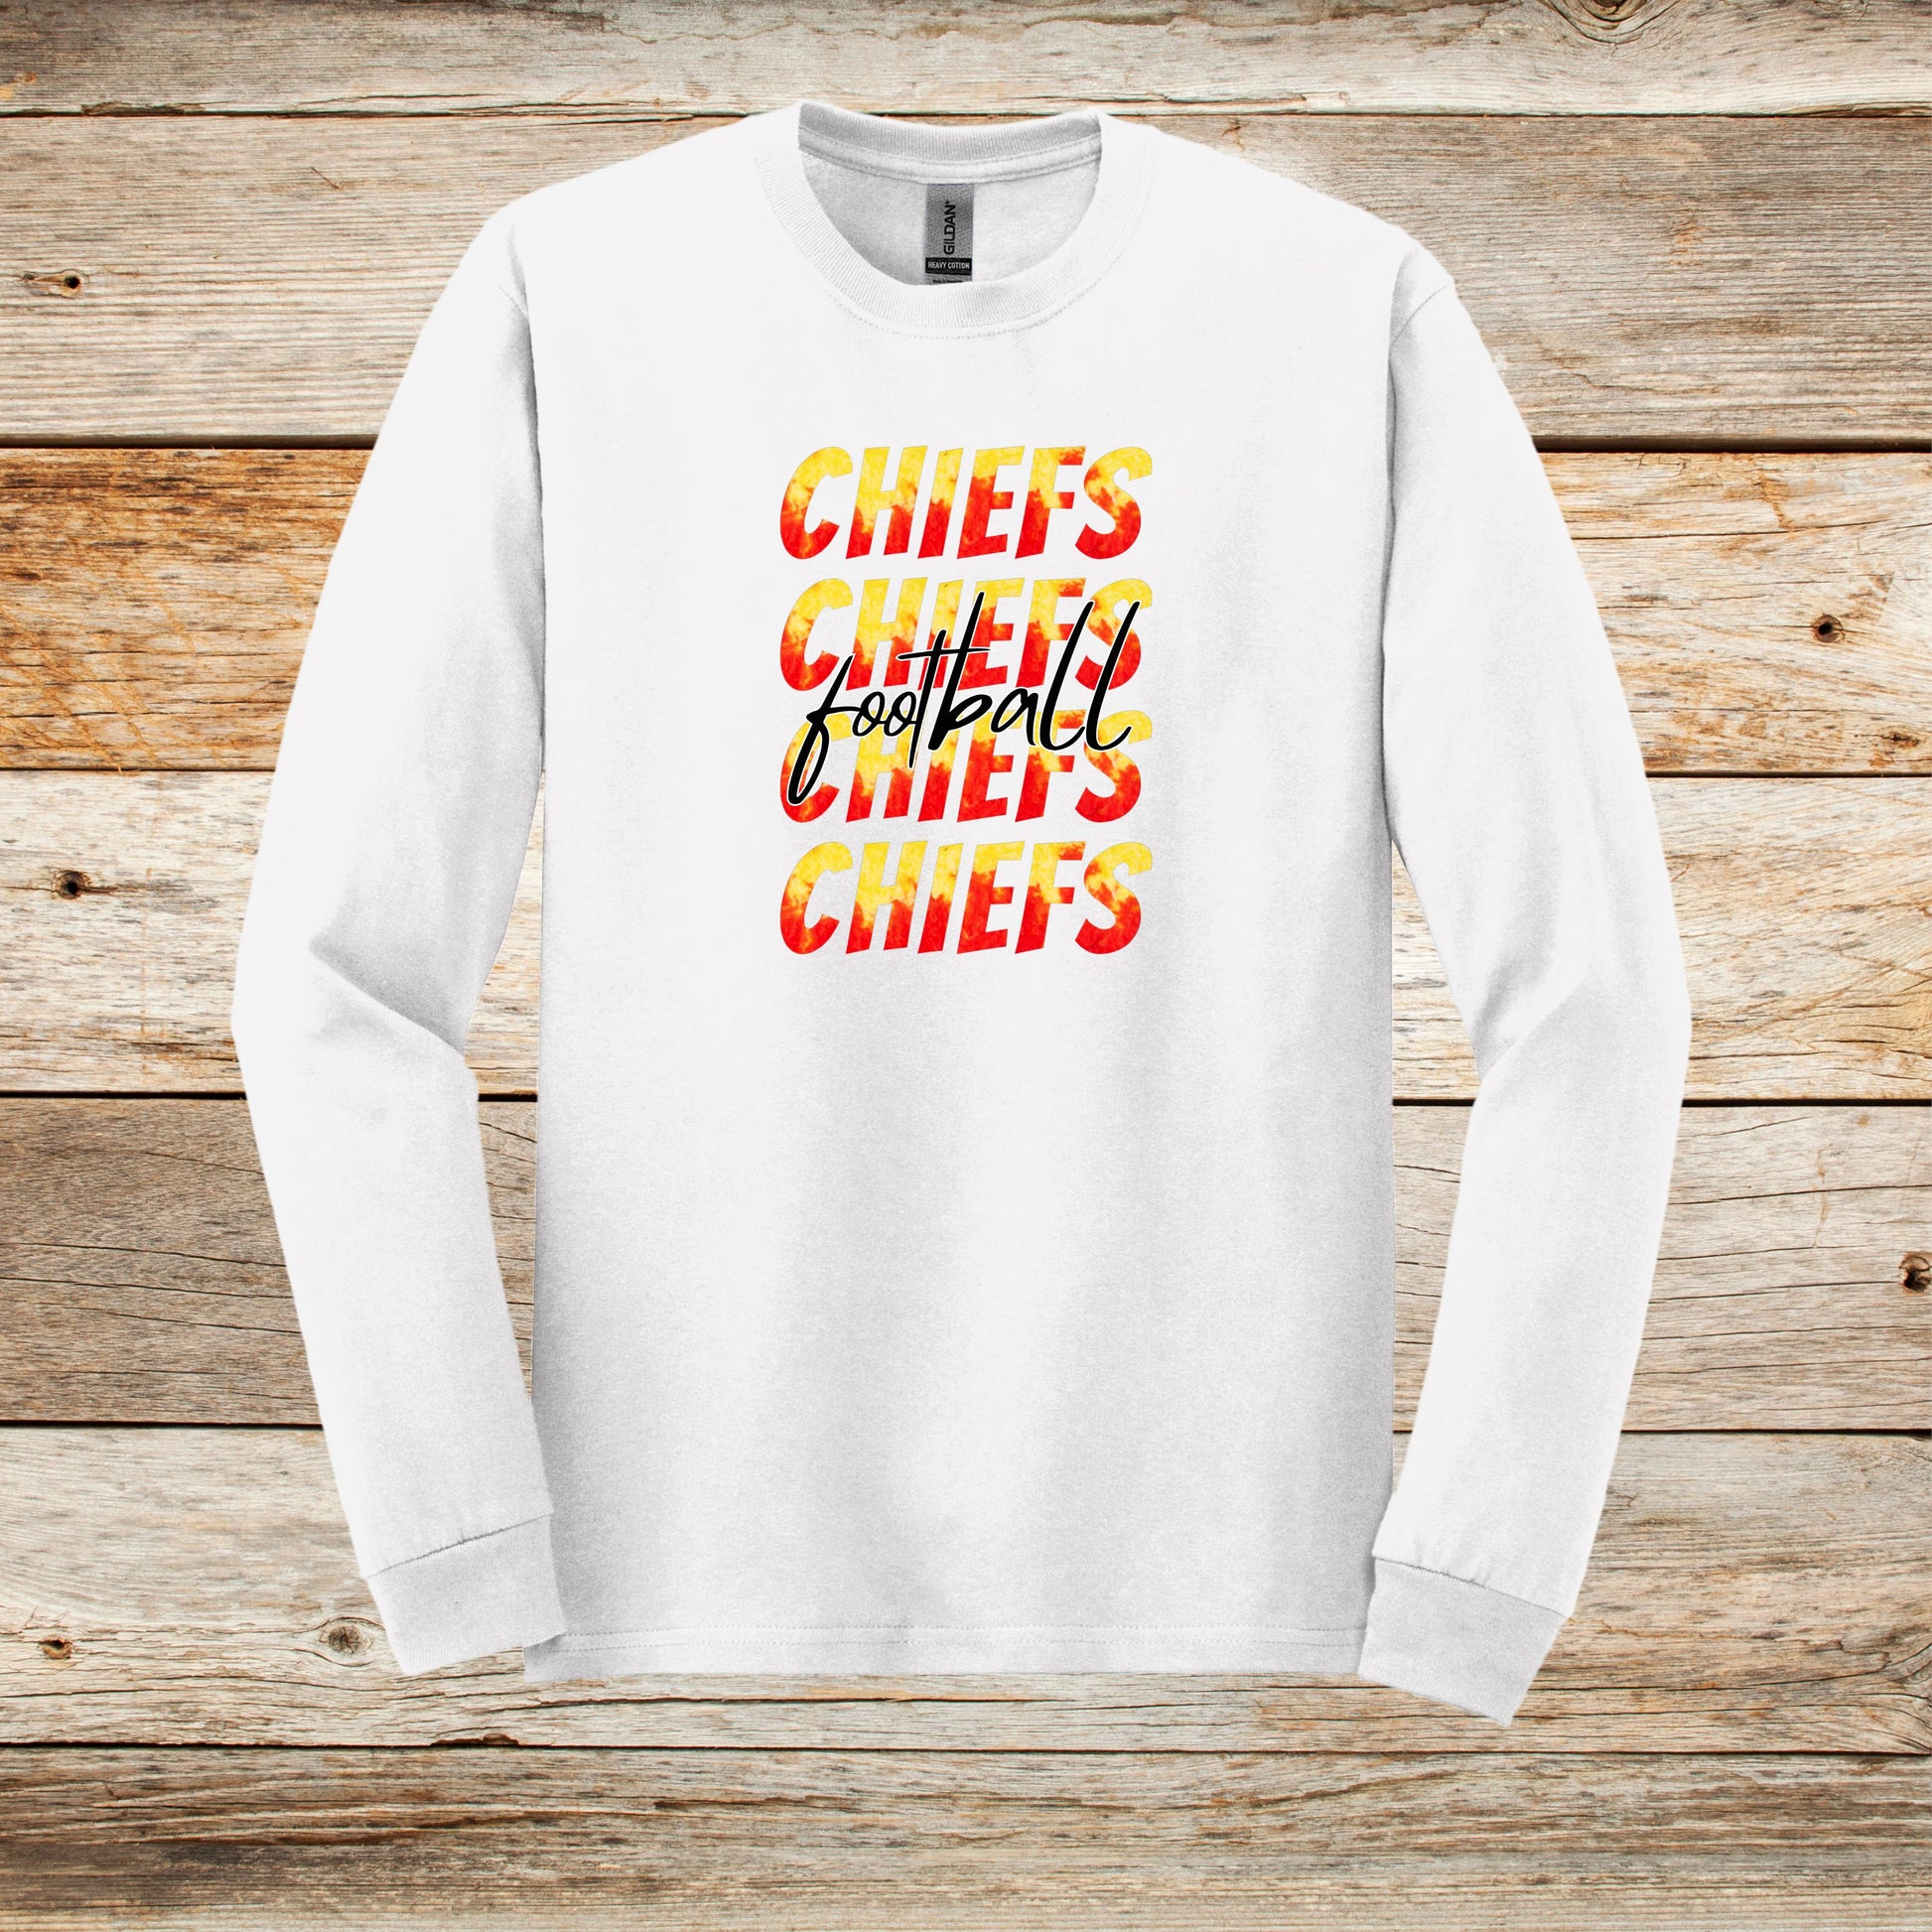 Football Long Sleeve T-Shirt - Kansas City Chiefs Football - Chiefs Football - Adult and Children's Tee Shirts - Sports Long Sleeve T-Shirts Graphic Avenue White Adult Small 